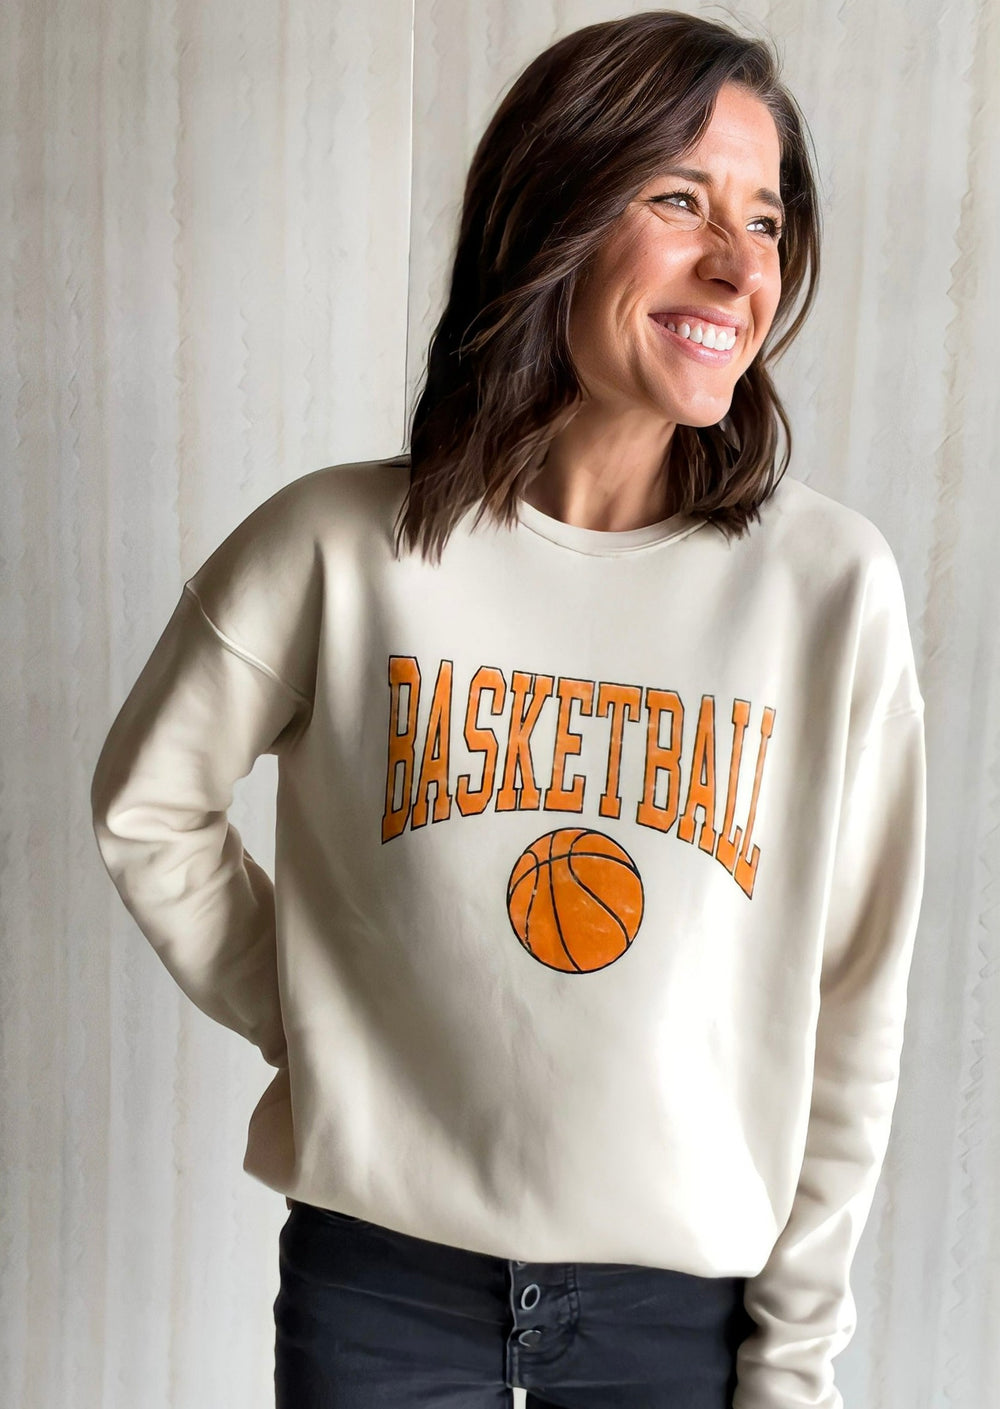 Women's Neutral Basketball Sweatshirt. Cream Sweatshirt with Basketball text and grahic in light orange. Sweatshirt from Champaign-Urbana, Illinois Embolden boutique.